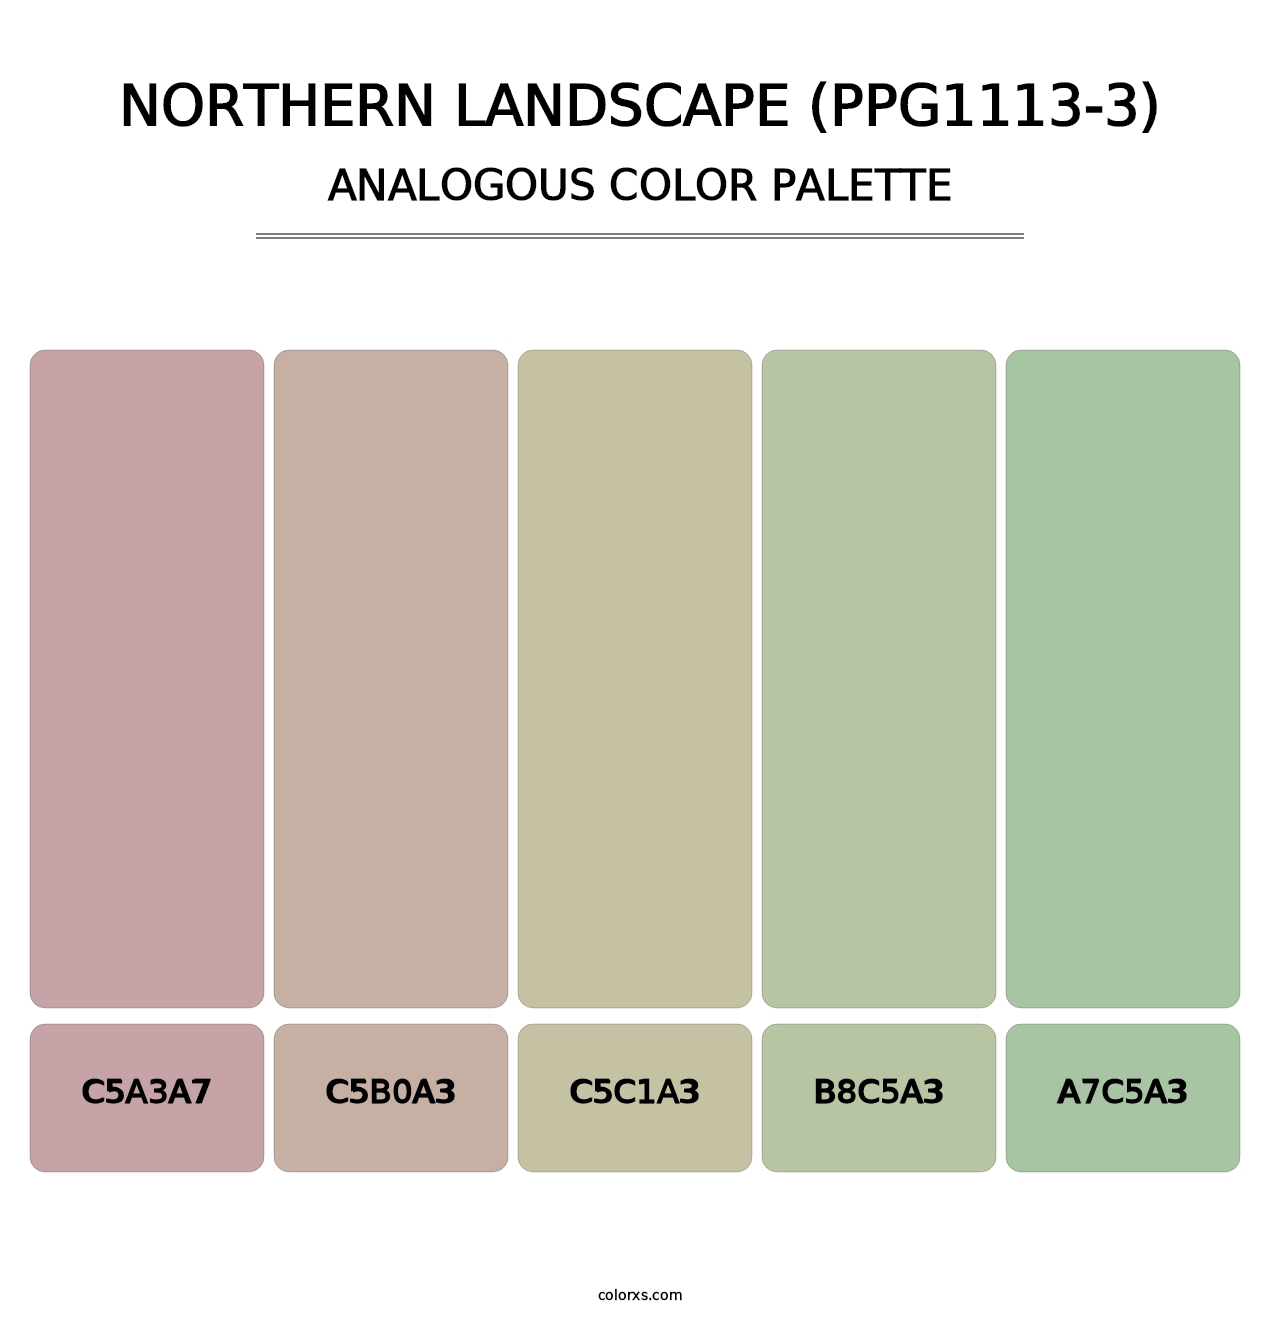 Northern Landscape (PPG1113-3) - Analogous Color Palette